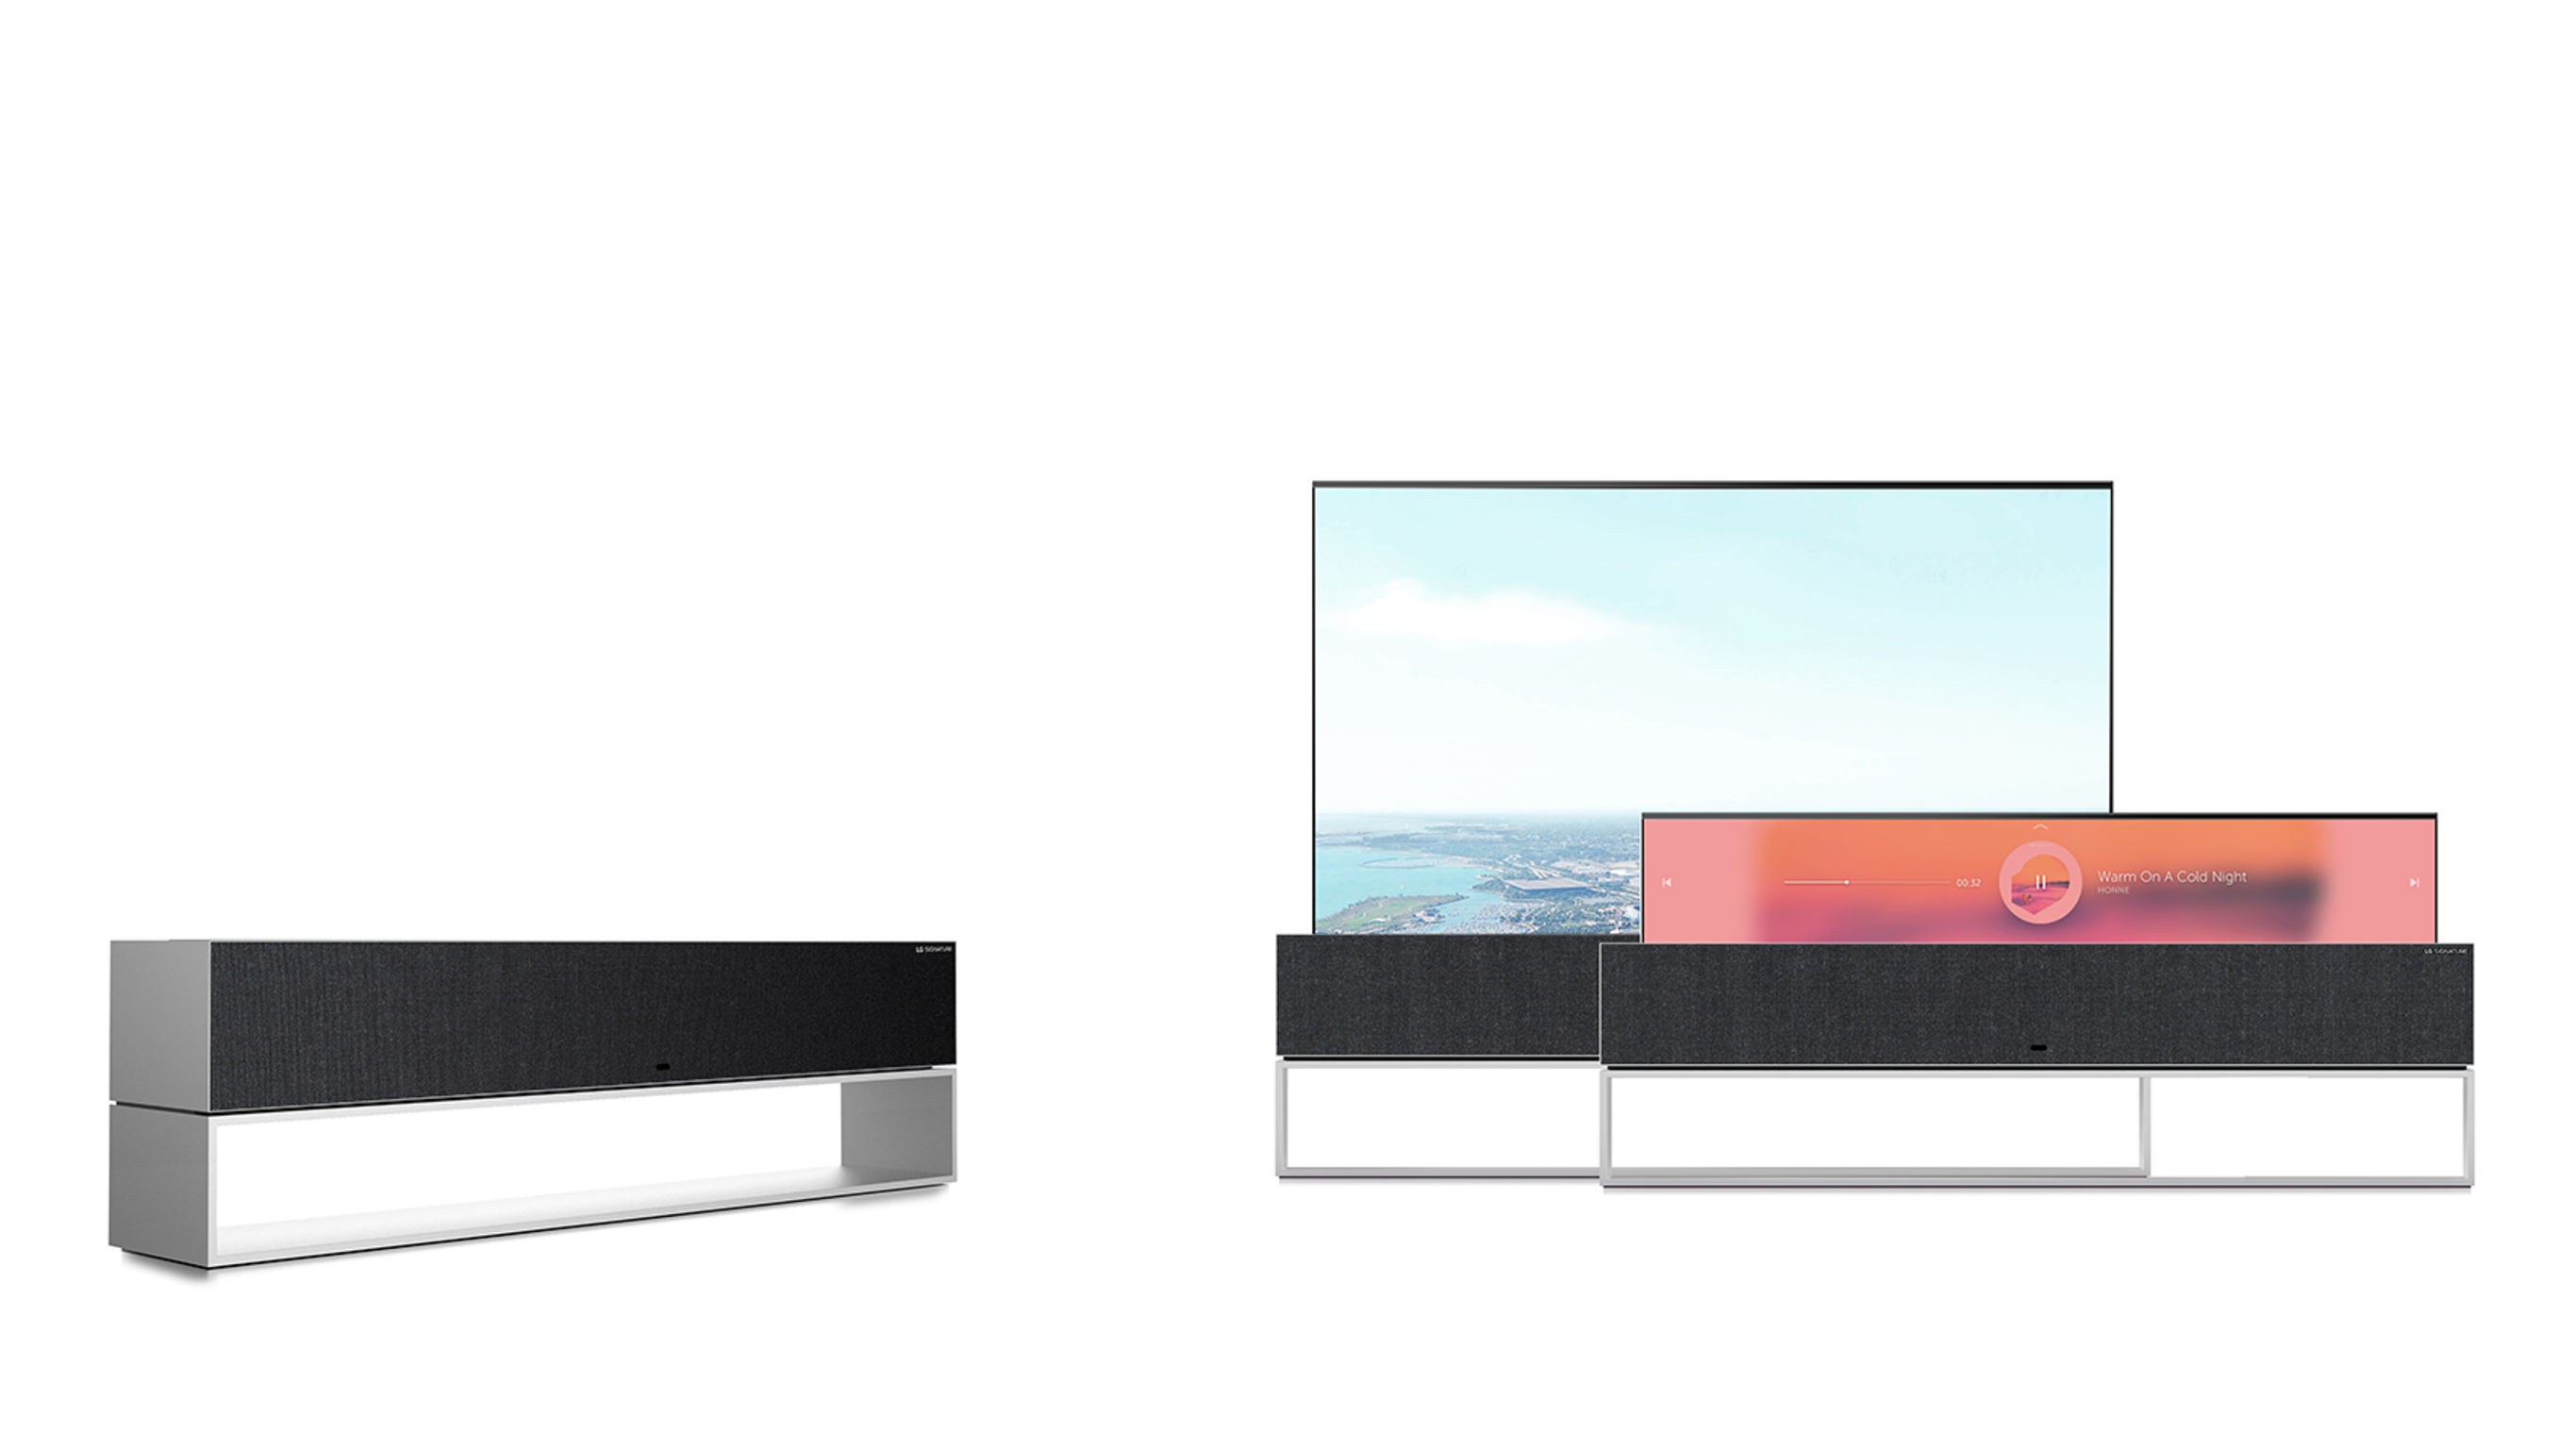 LG SIGNATURE OLED TV (R9)